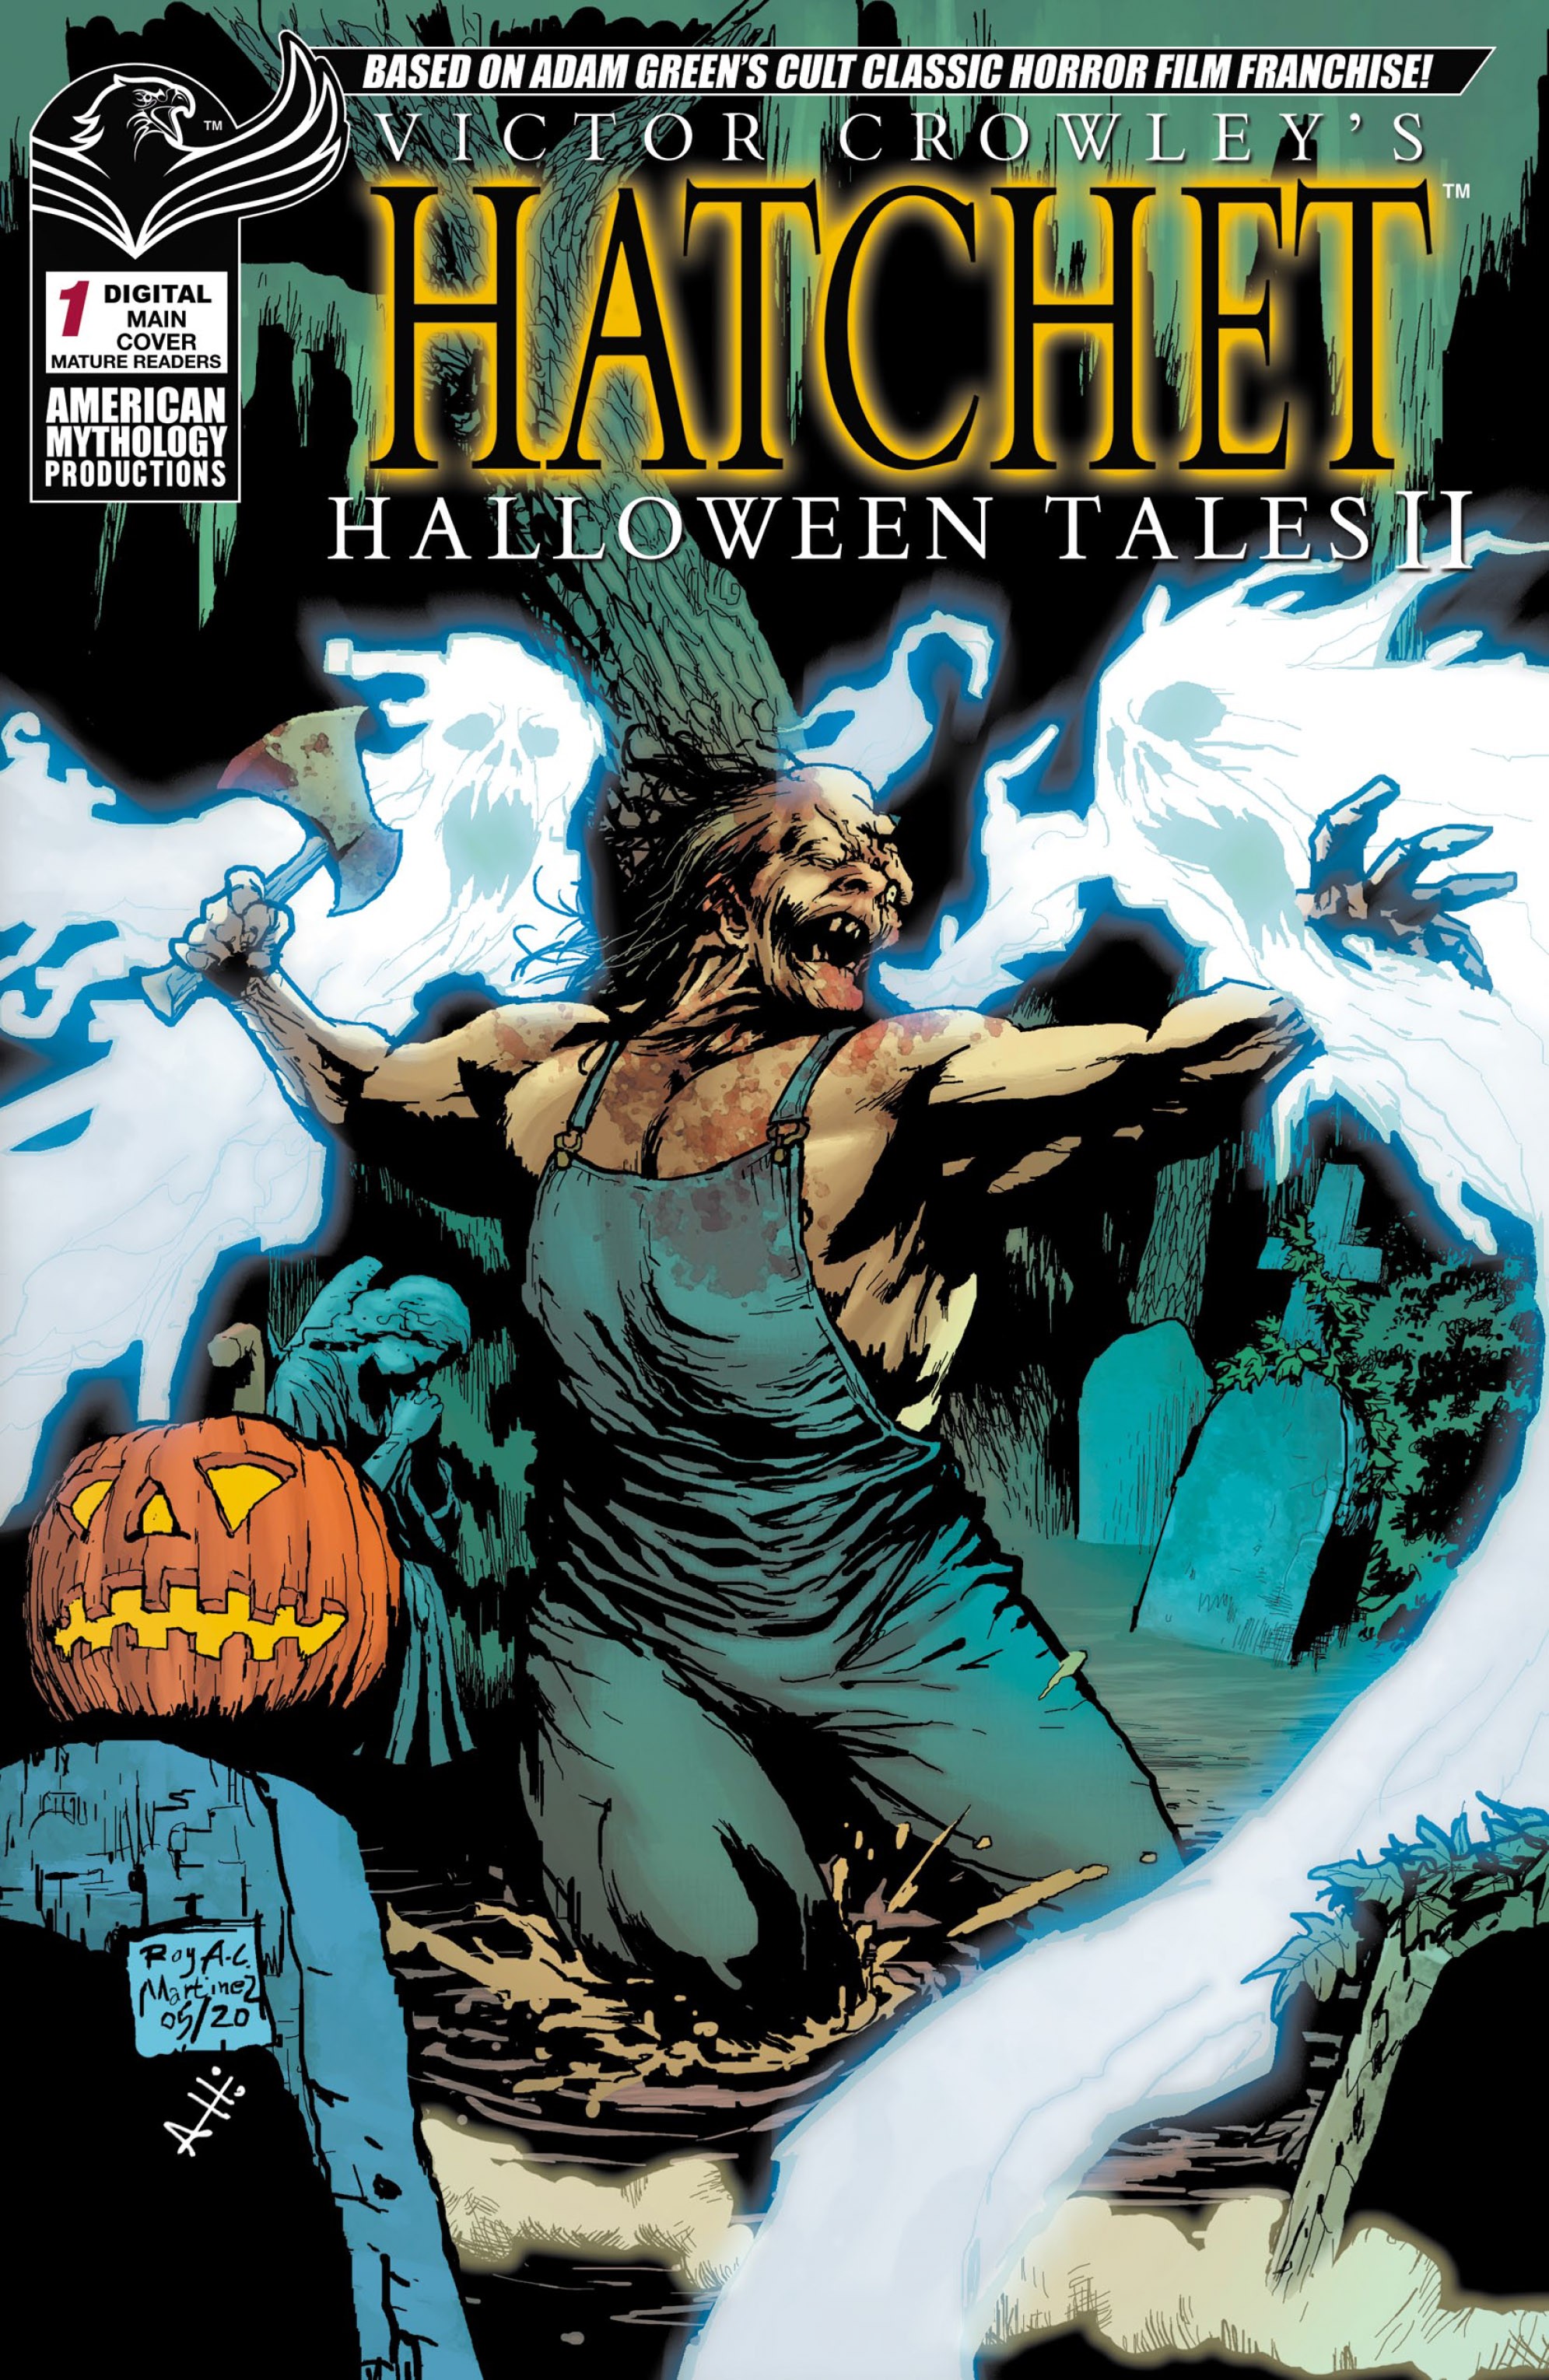 Read online Victor Crowley's Hatchet Halloween Tales comic -  Issue #2 - 1